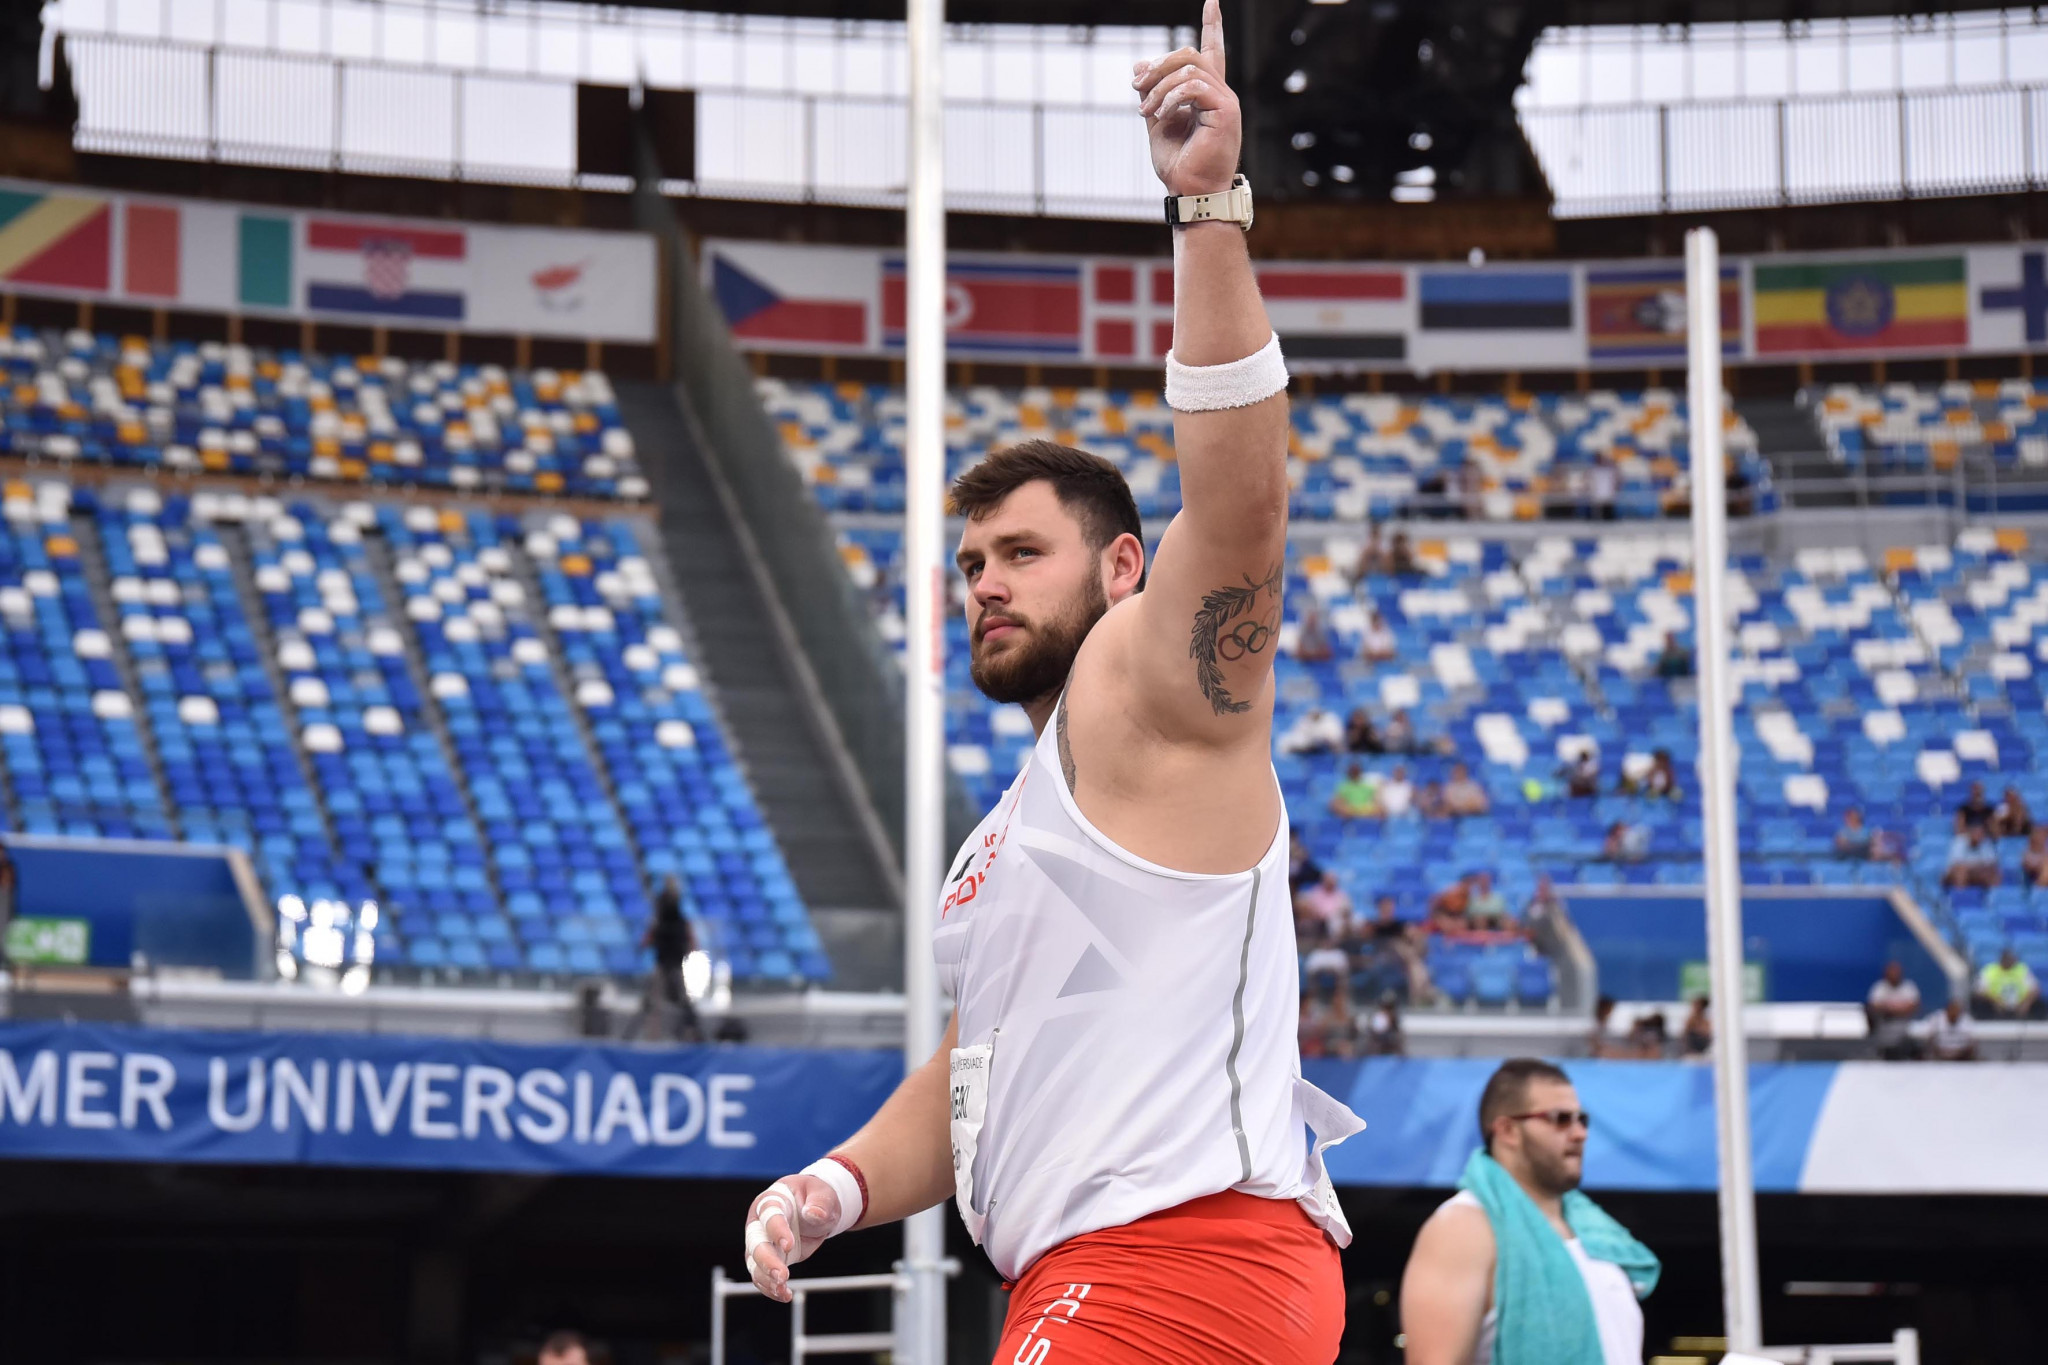 Bukowiecki smashes Universiade shot put record as athletics gets under way at Naples 2019